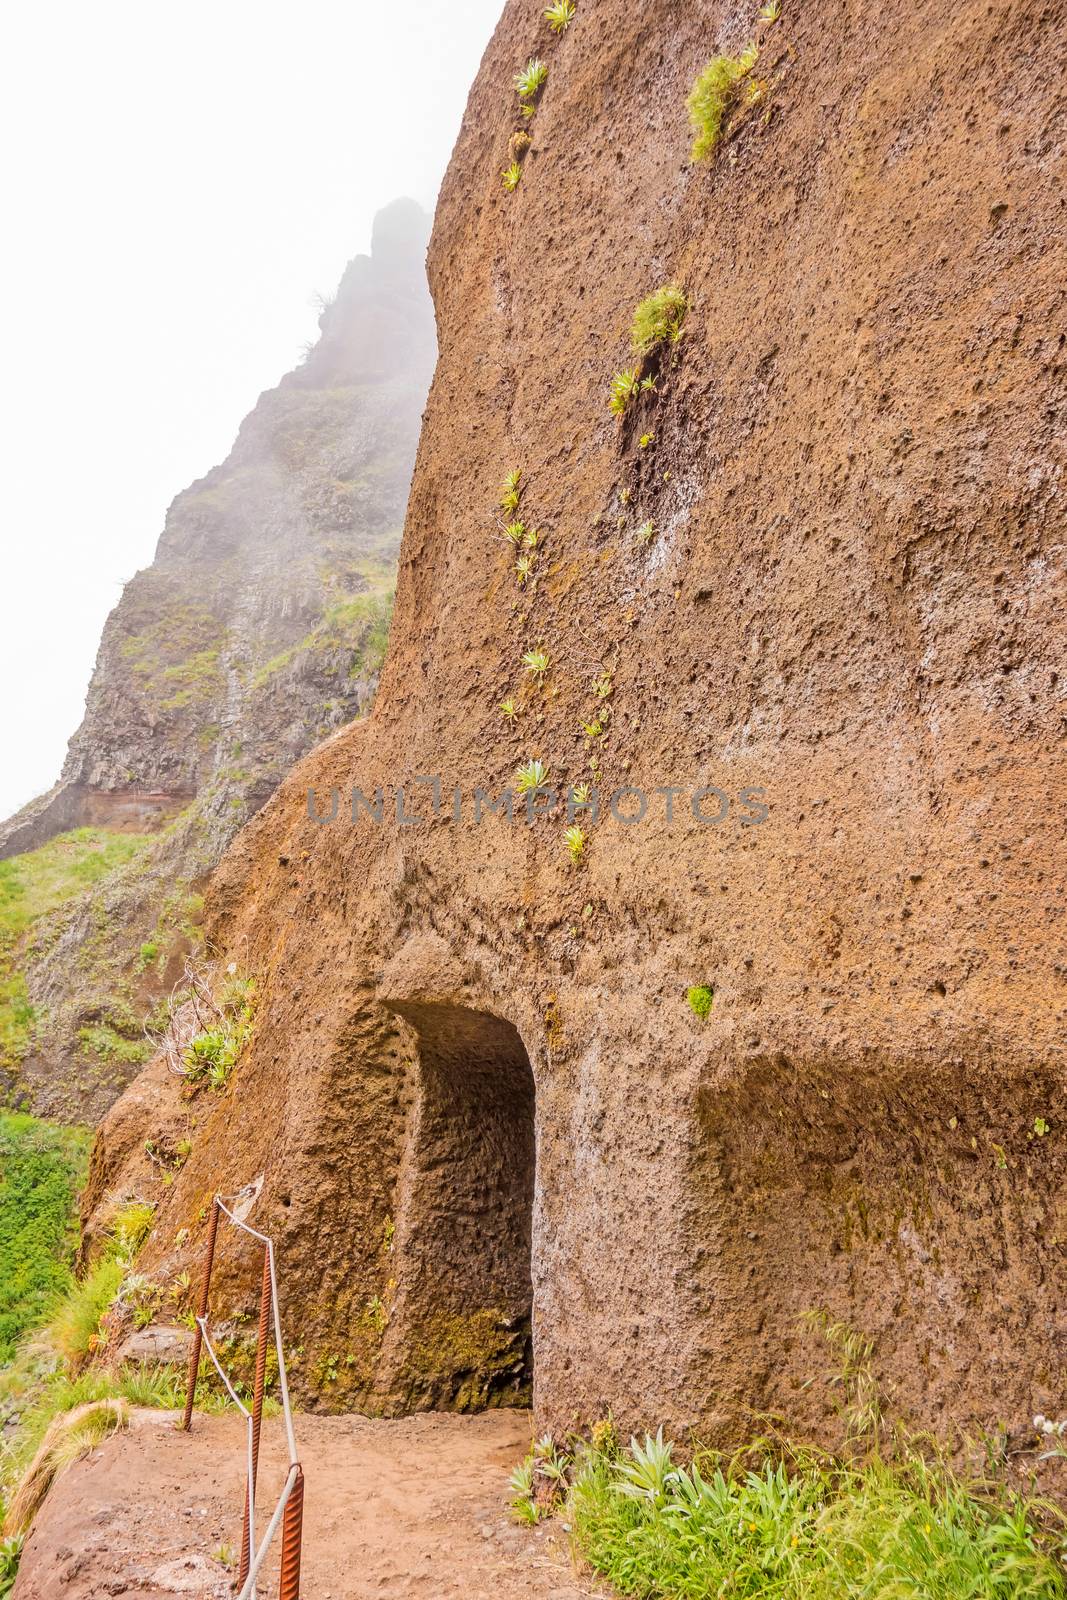 Hiking trail passage from mountain Pico Arieiro to Pico Ruivo, Madeira - tunnel entrance / exit